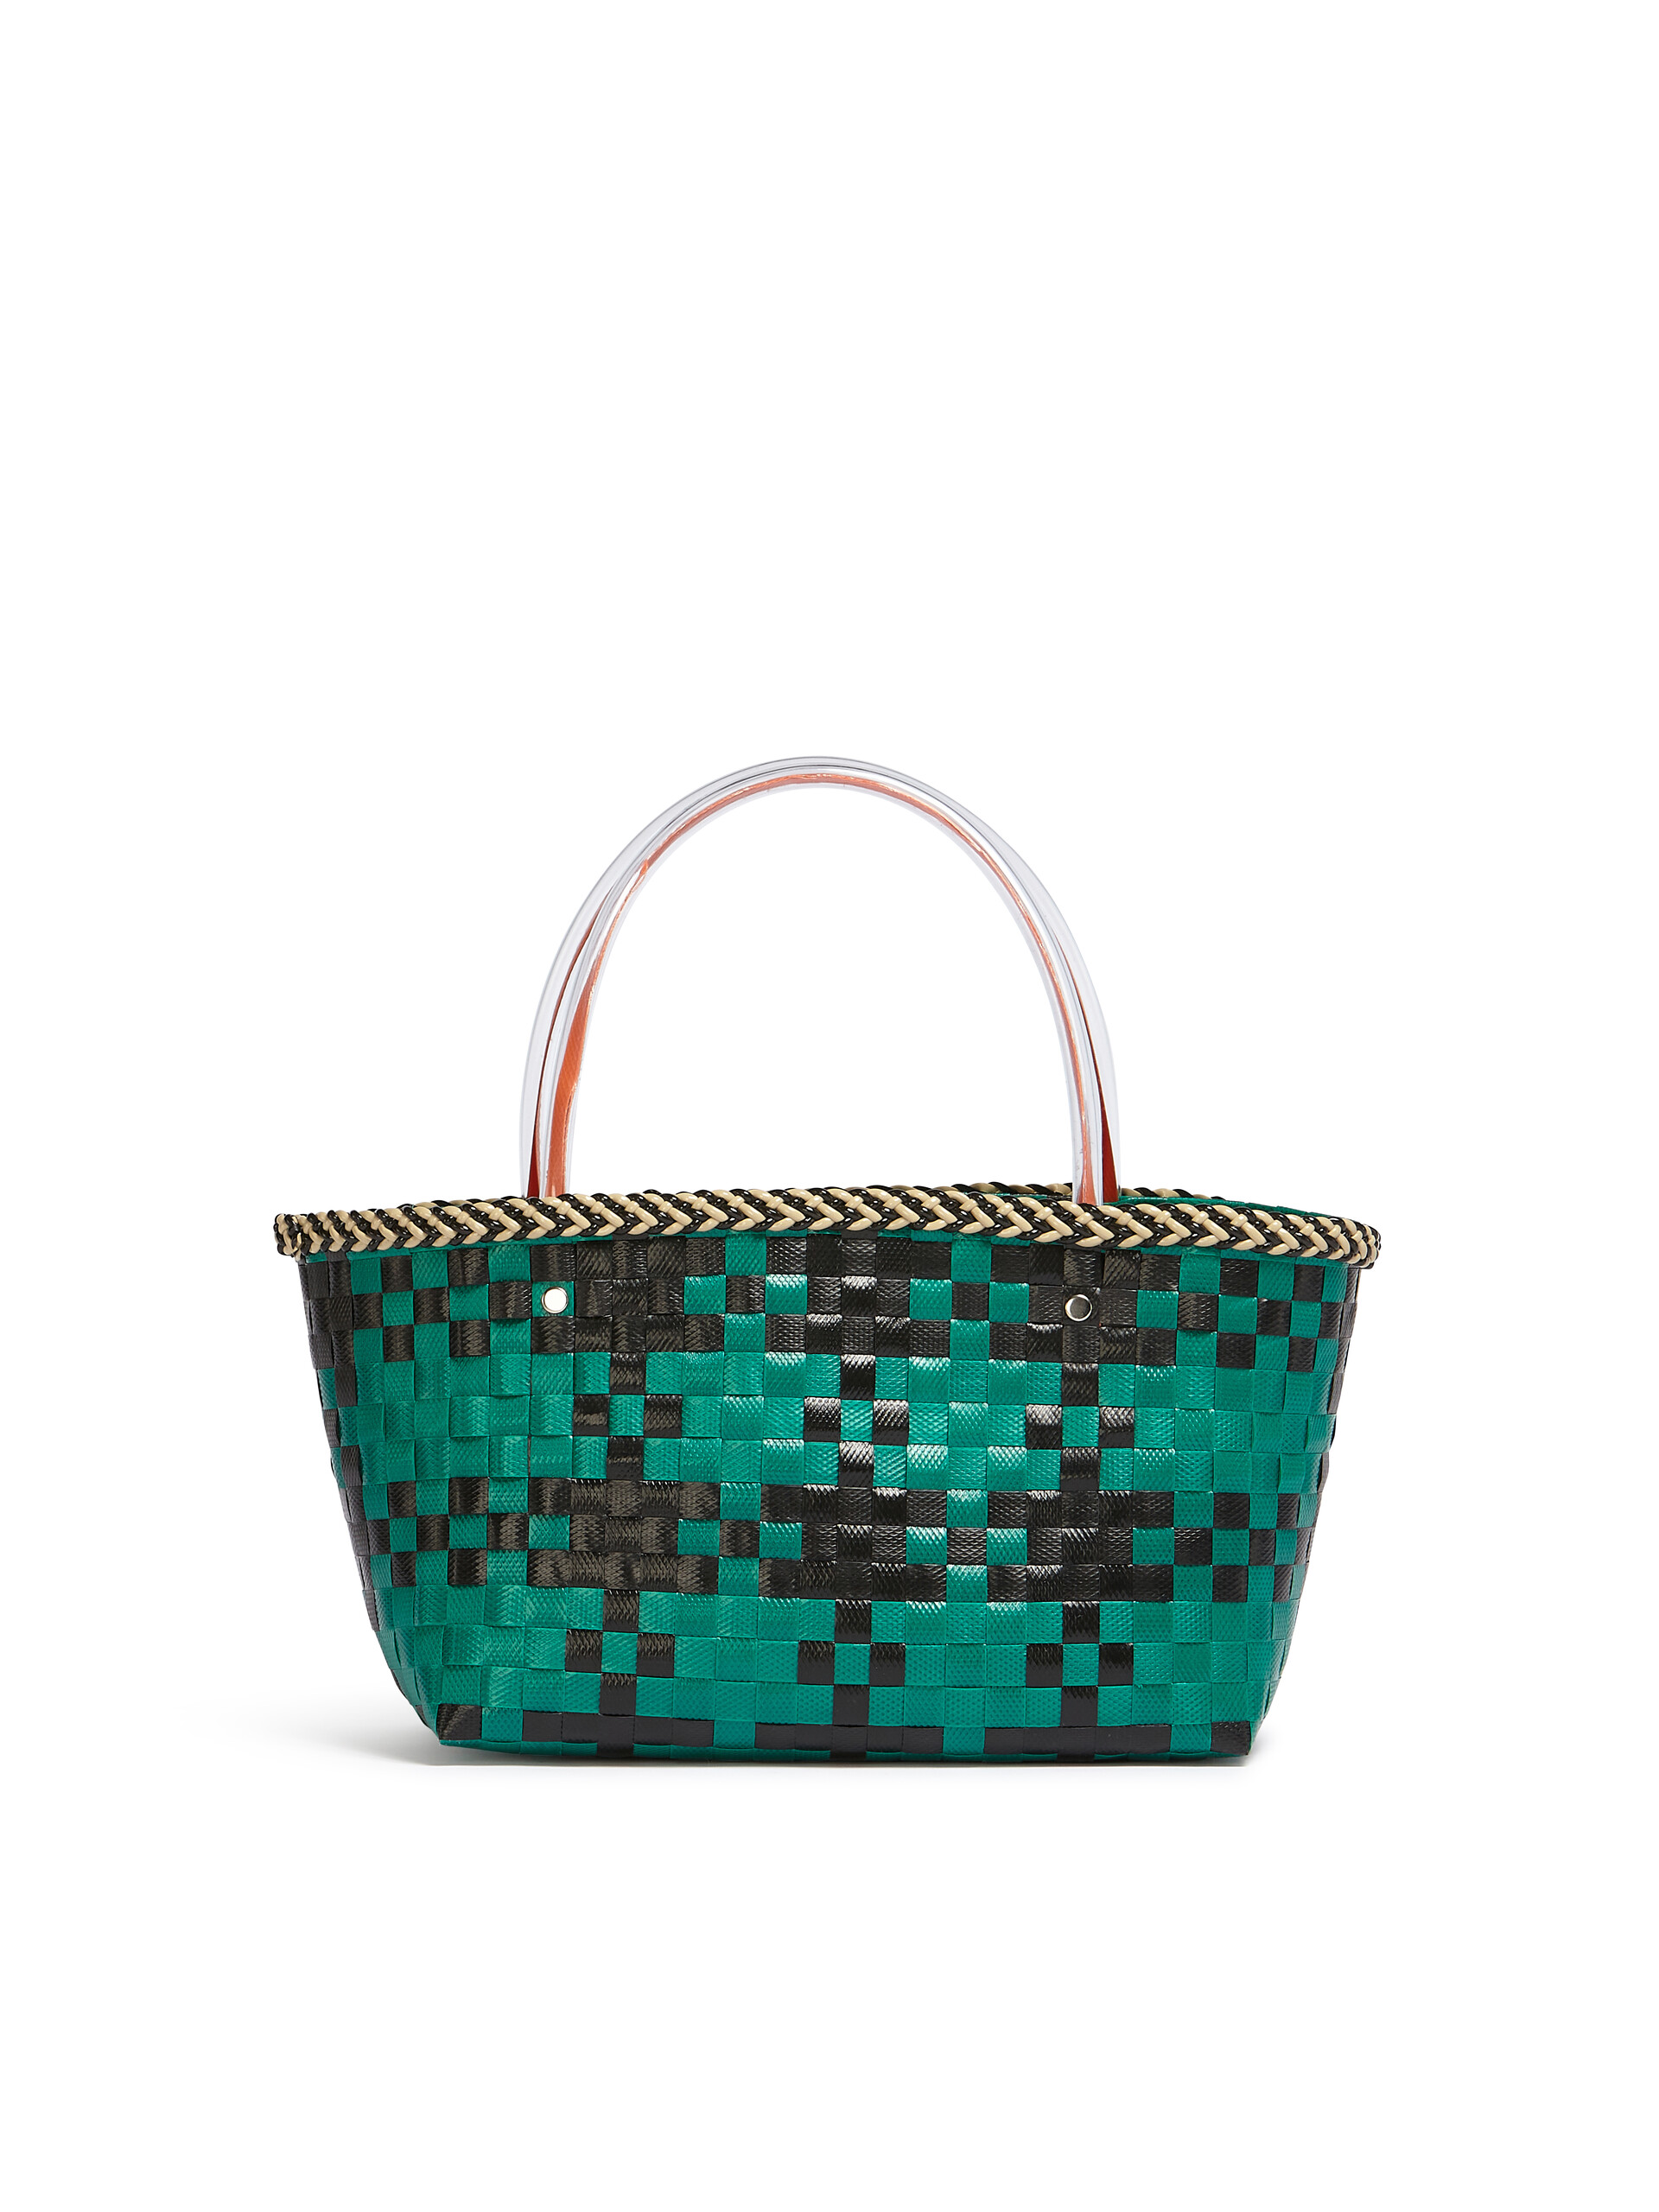 MARNI MARKET CHECK BAG in black and green tartan woven material - Bags - Image 3